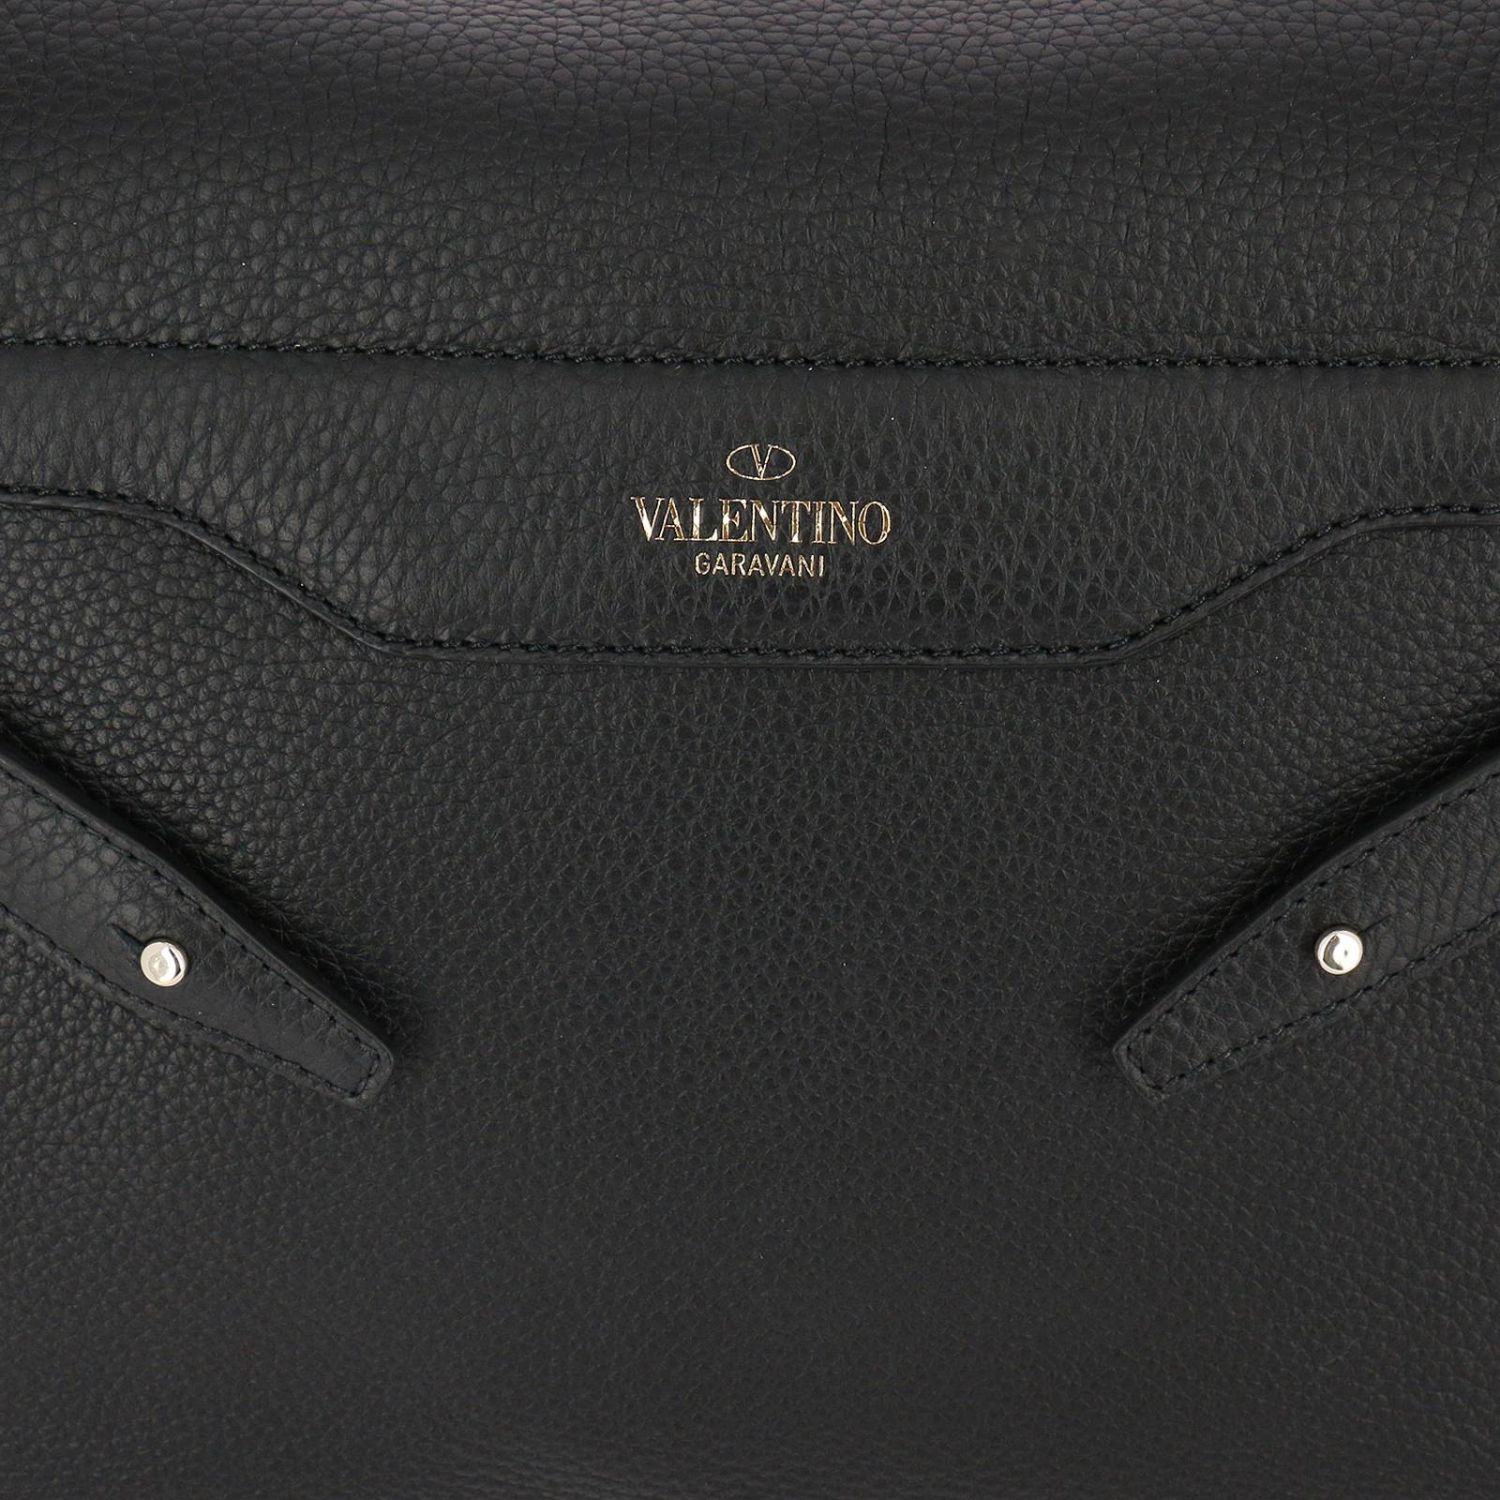 Valentino Garavani Outlet: Valentino Twiny bag in genuine hammered ...